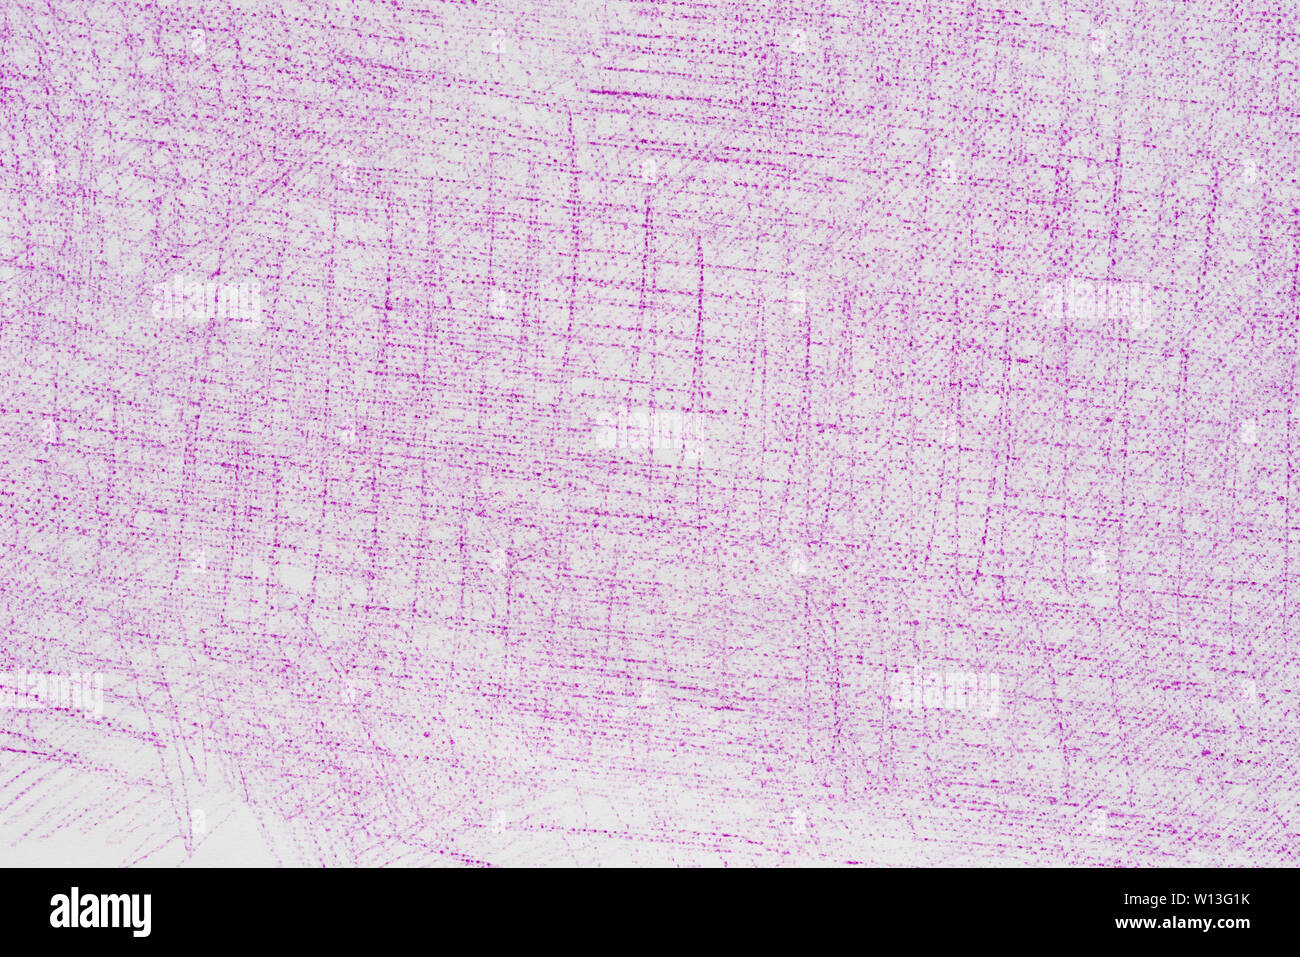 violet color crayon doodles on white paper background texture Stock Photo